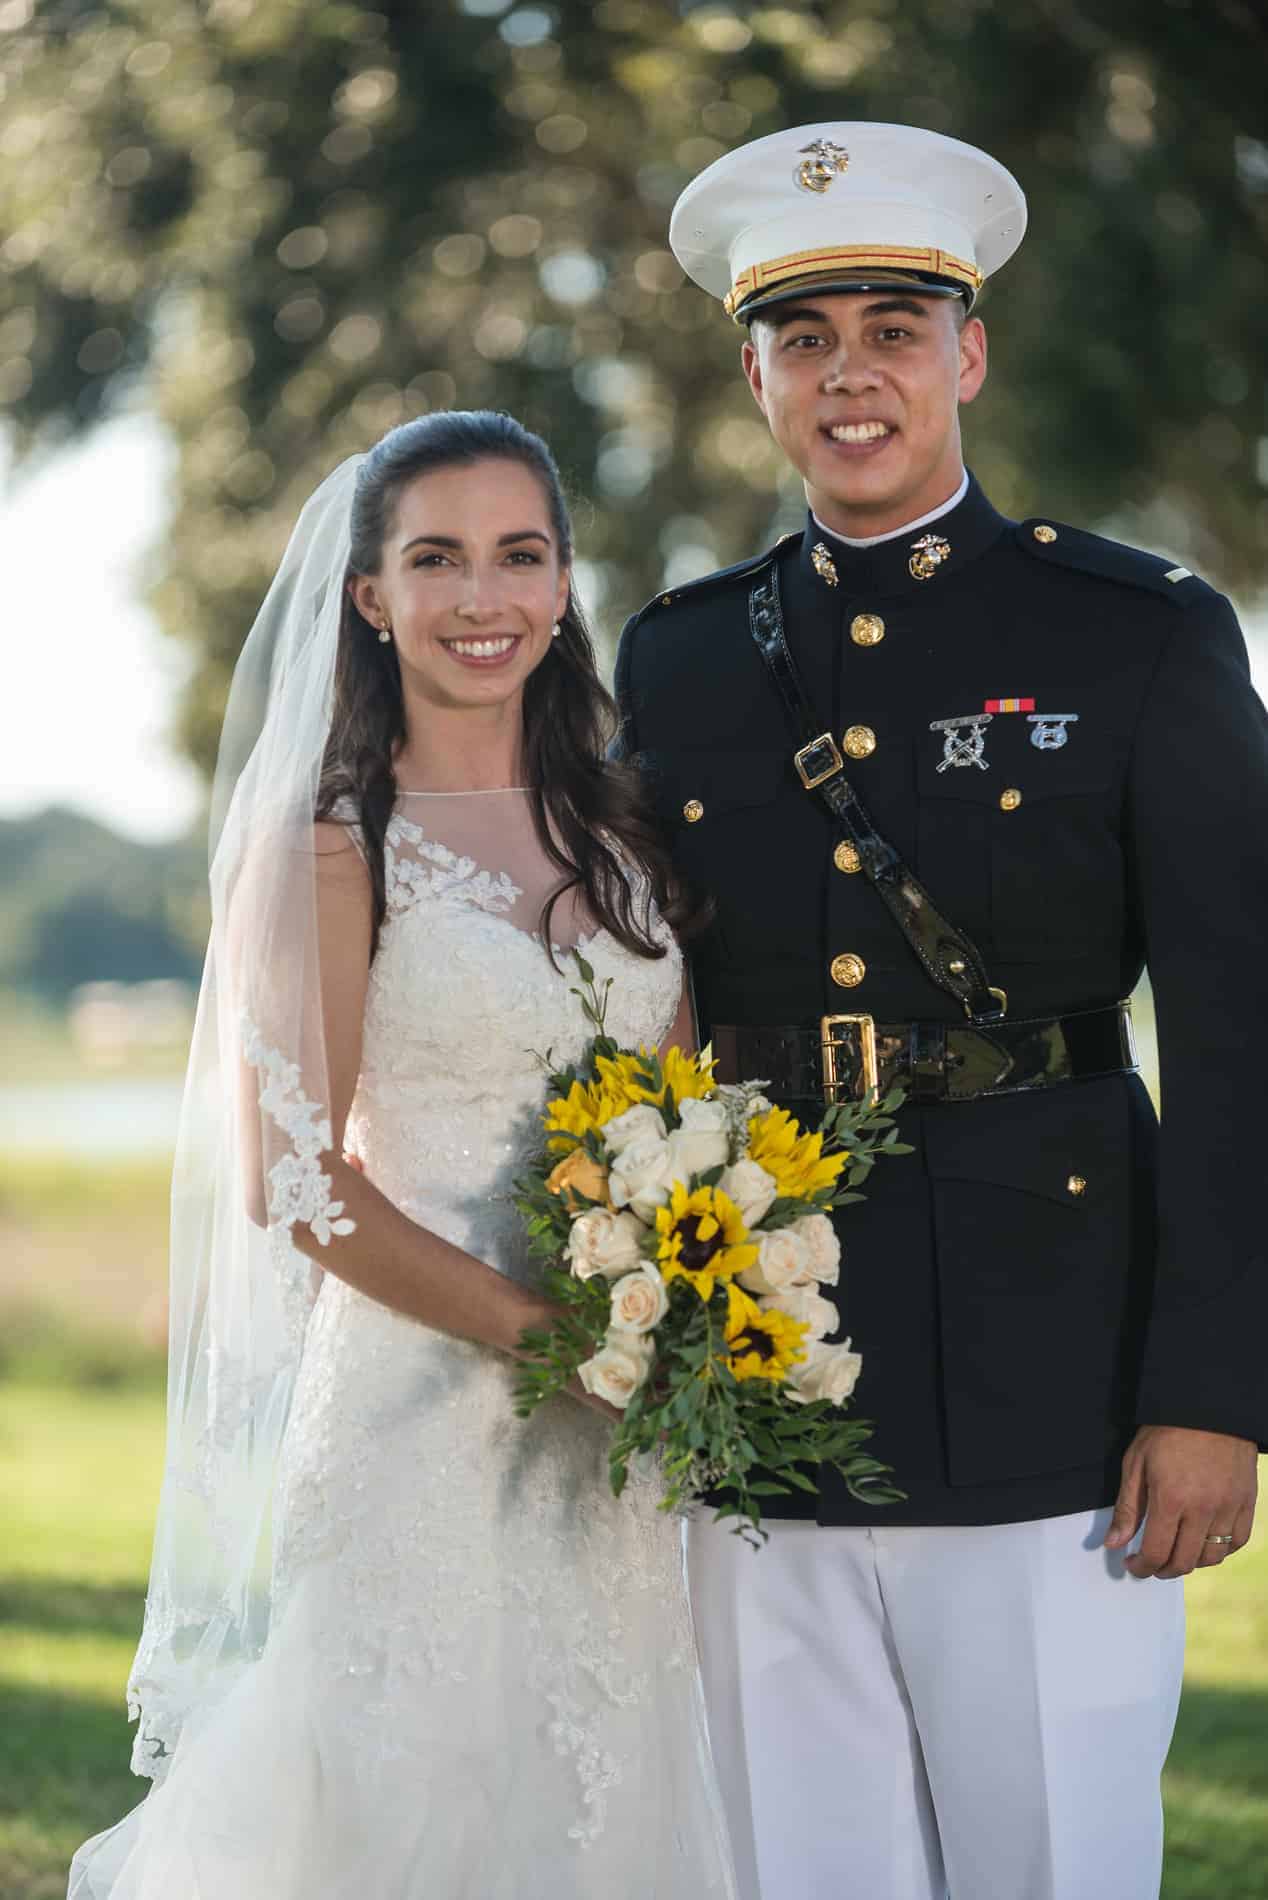 Overtime for Wedding Vendors at a Wonderful Orlando Military Wedding